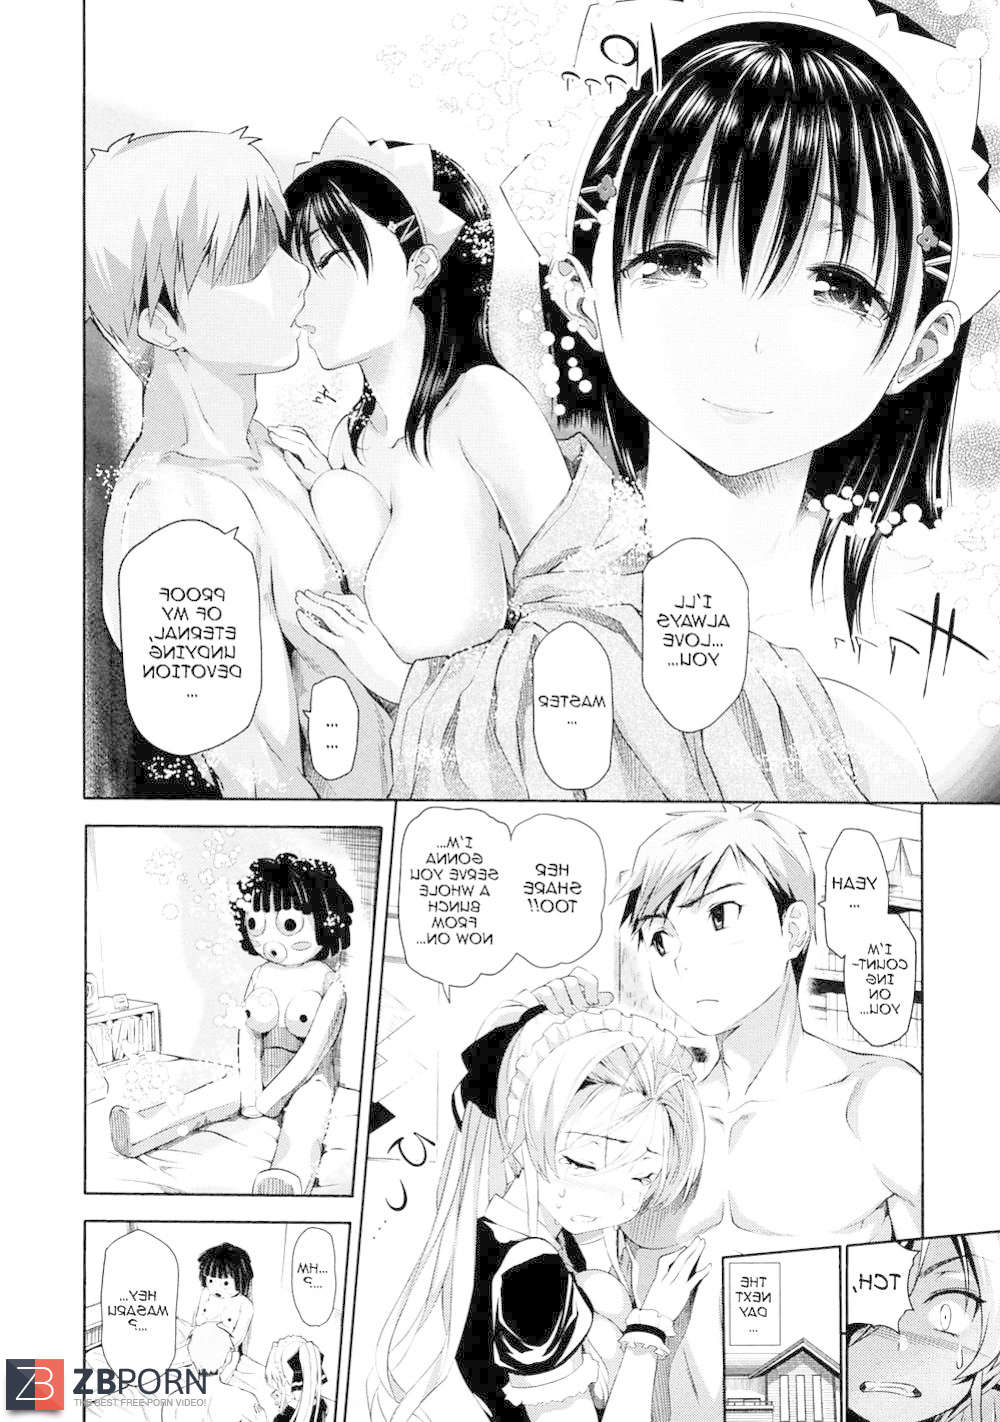 Manga hentai porno